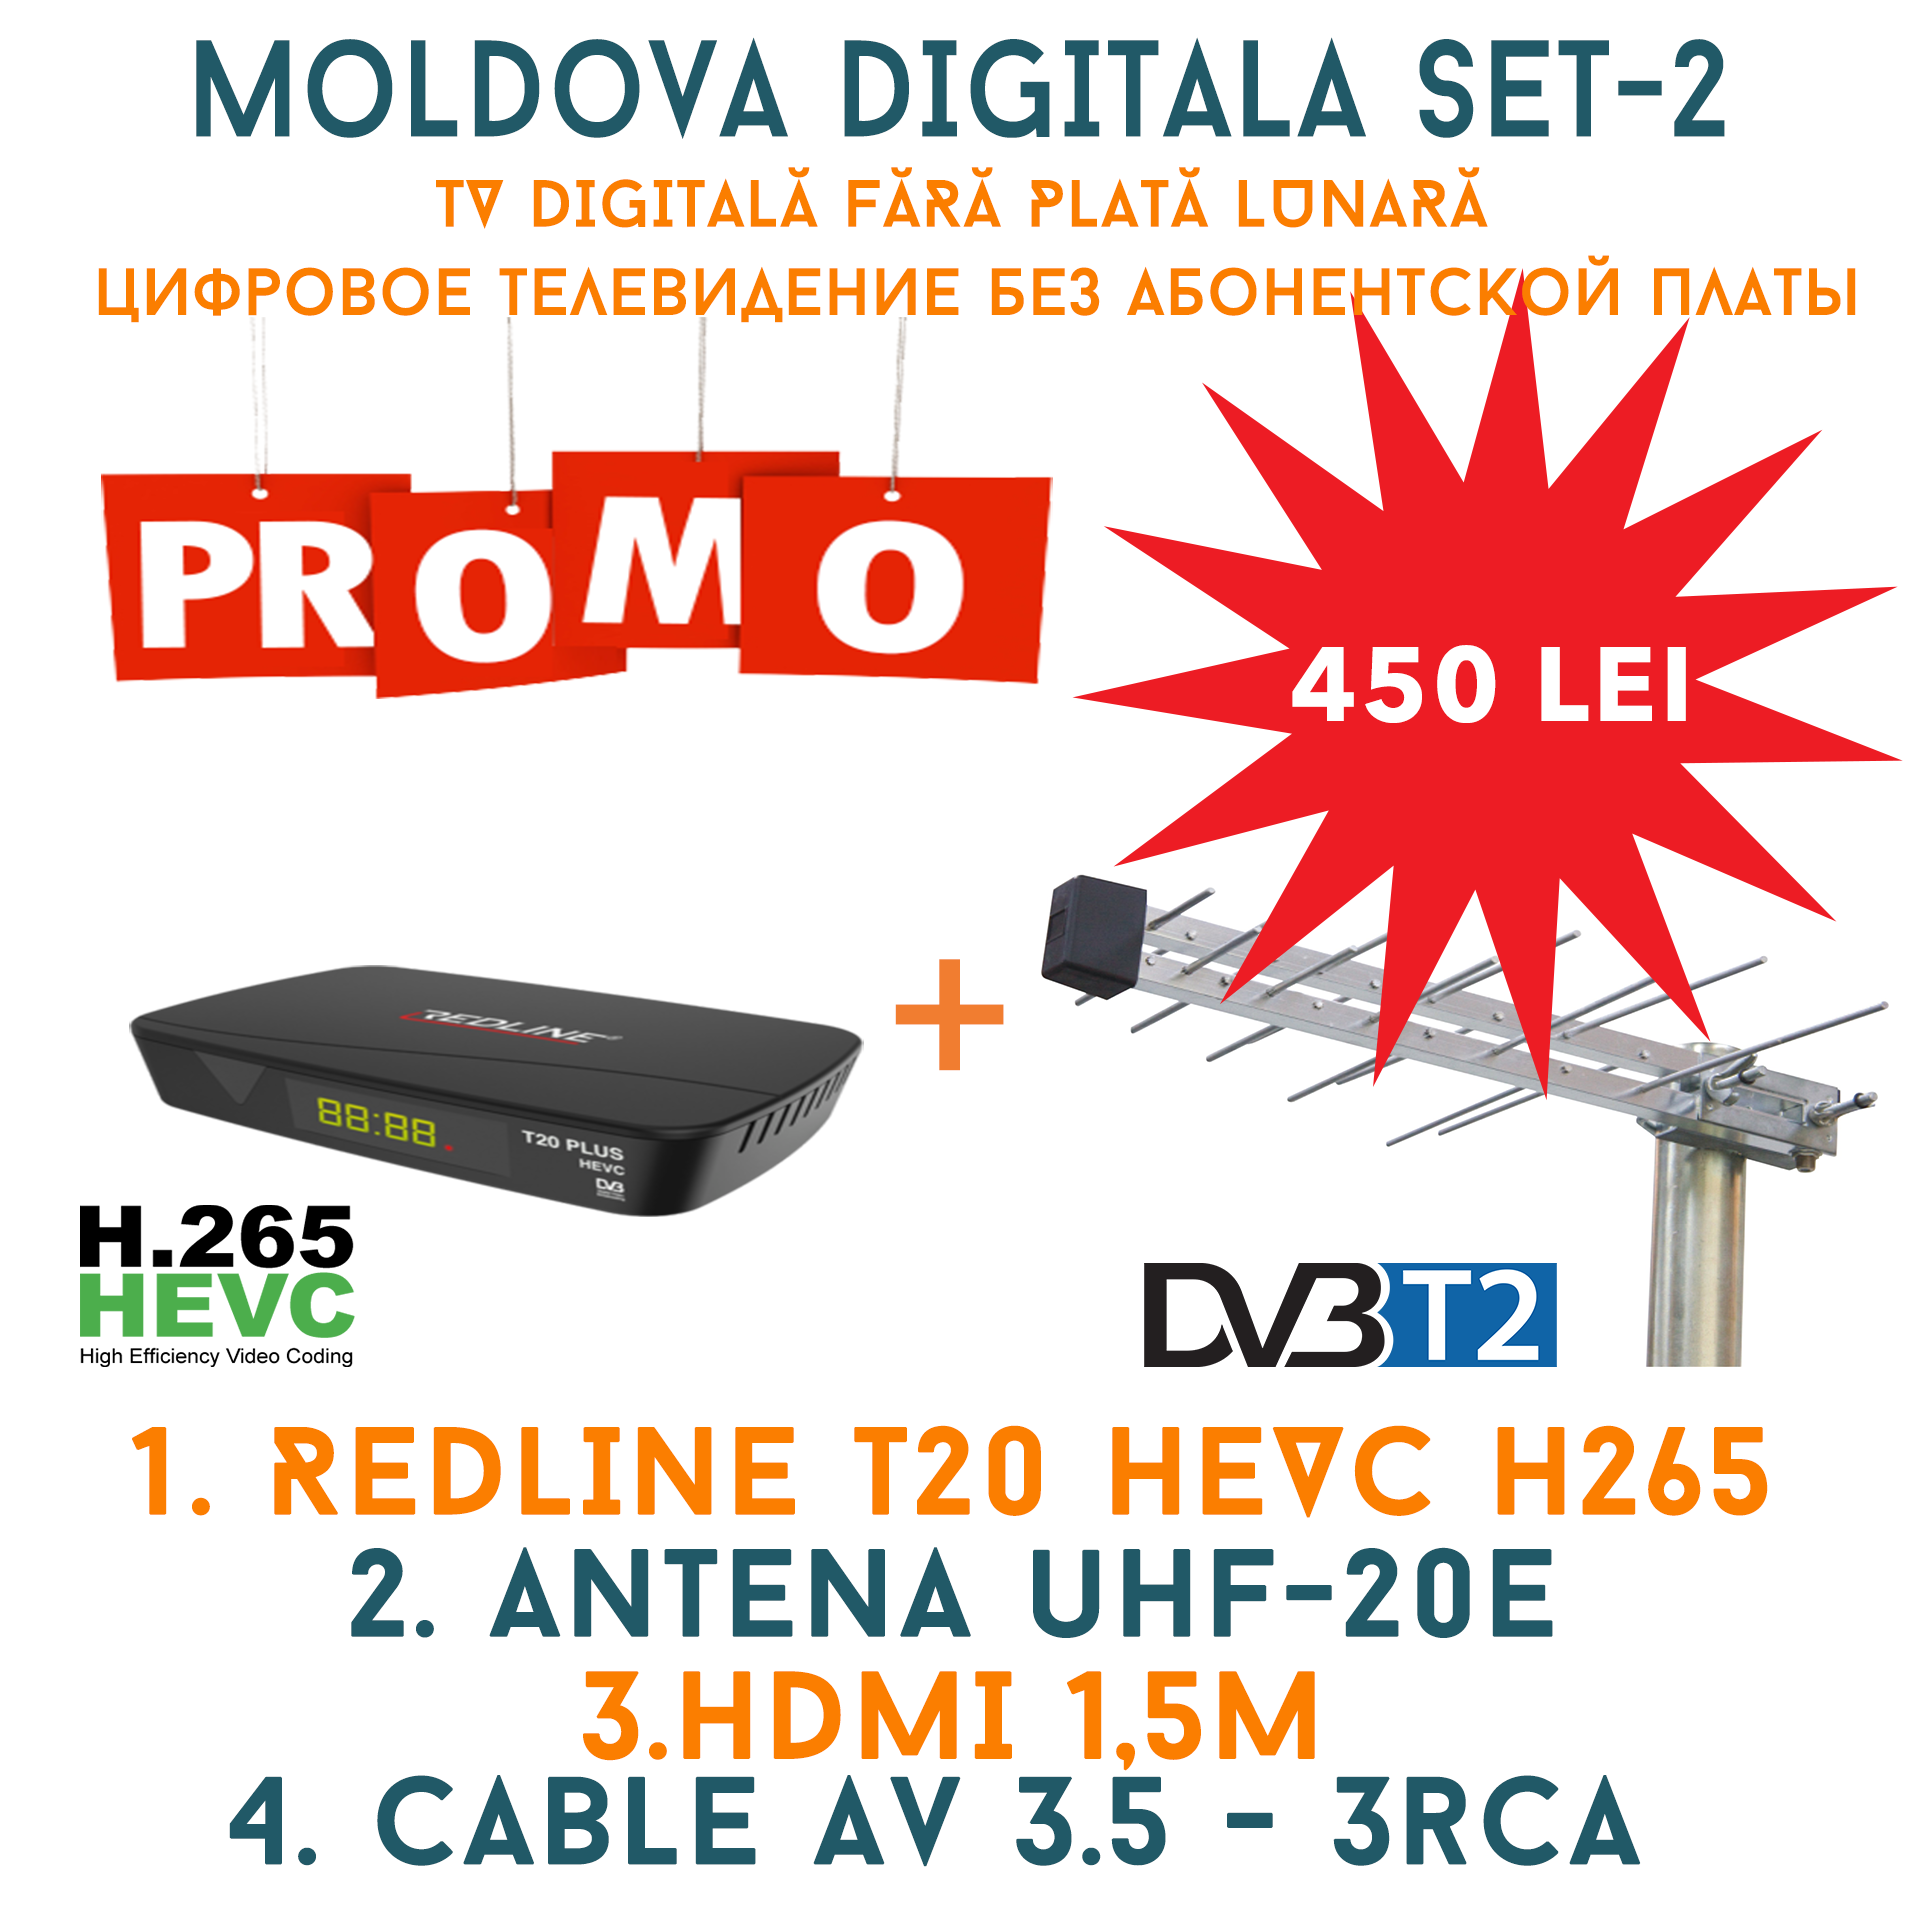 sell adventure Antibiotics PROMO SET TV DIGITALA T2 (MOLDOVA) - 2 Cumpăr în Moldova Chişinău Preţ